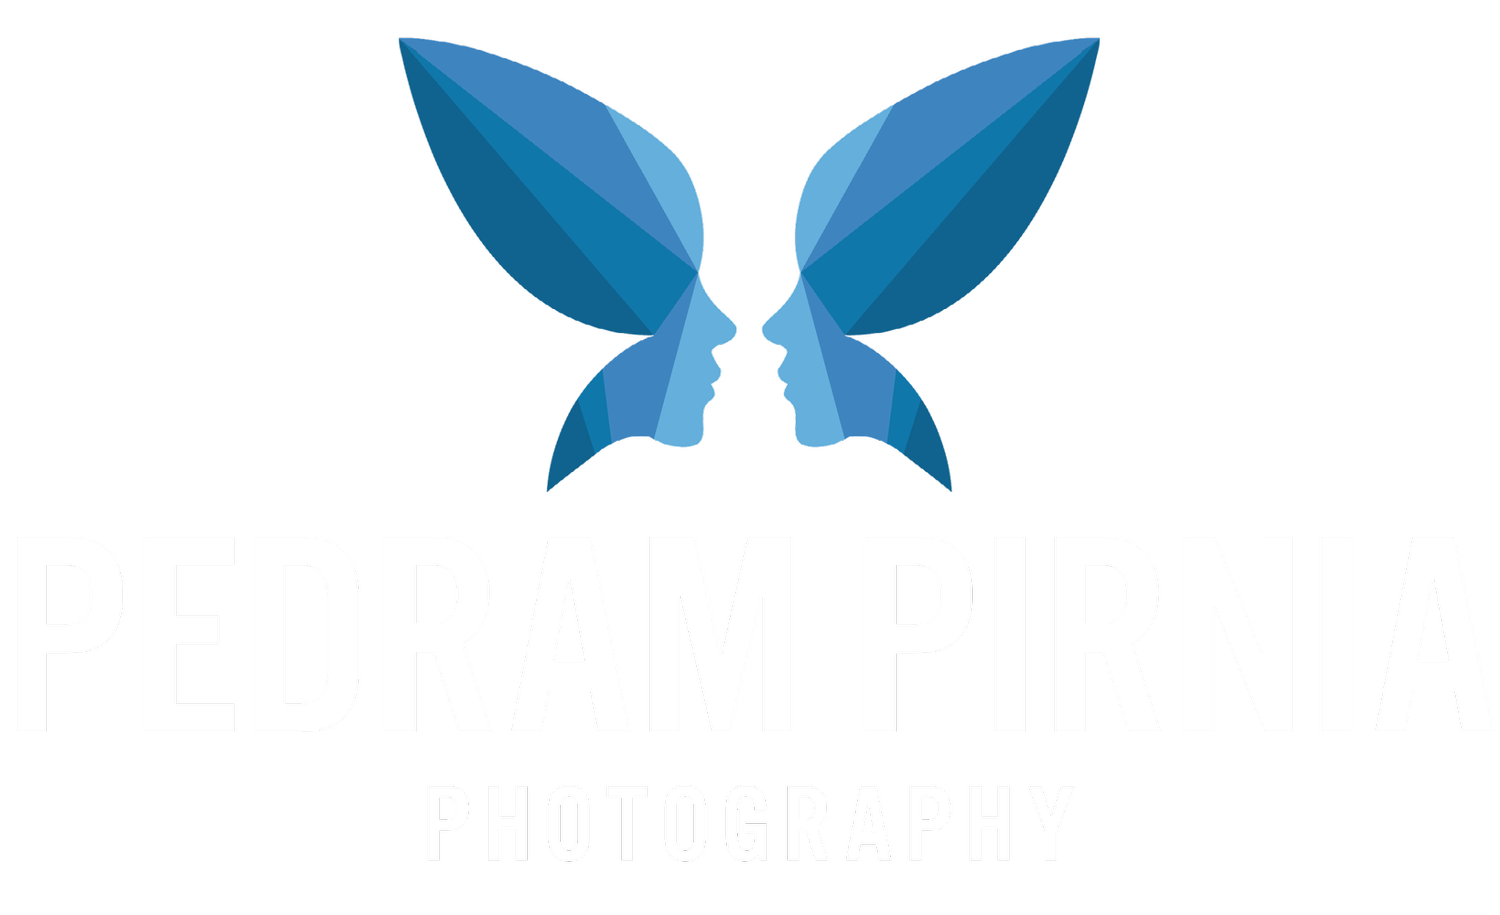 Pedram Pirnia Photography